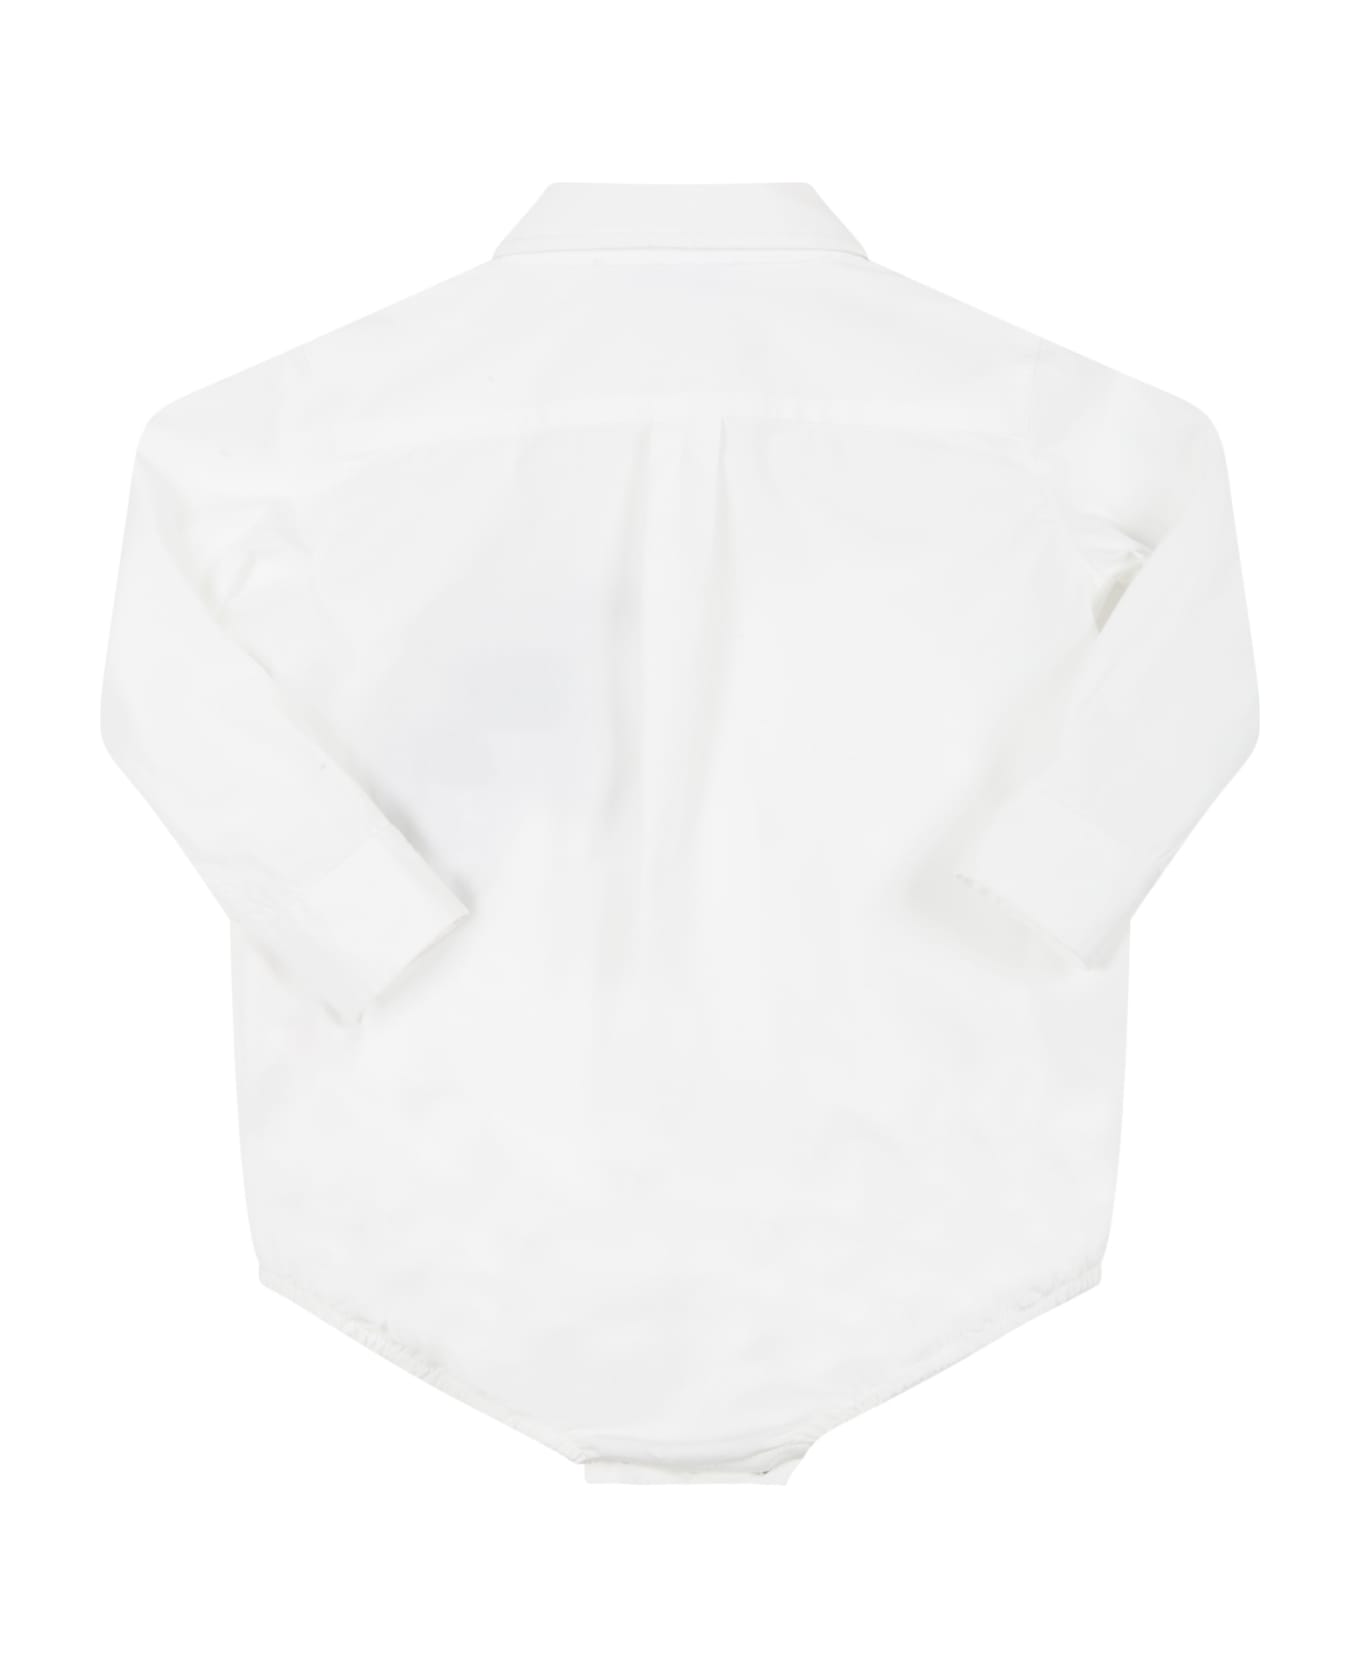 Dolce & Gabbana White Shirt For Baby Boy - White